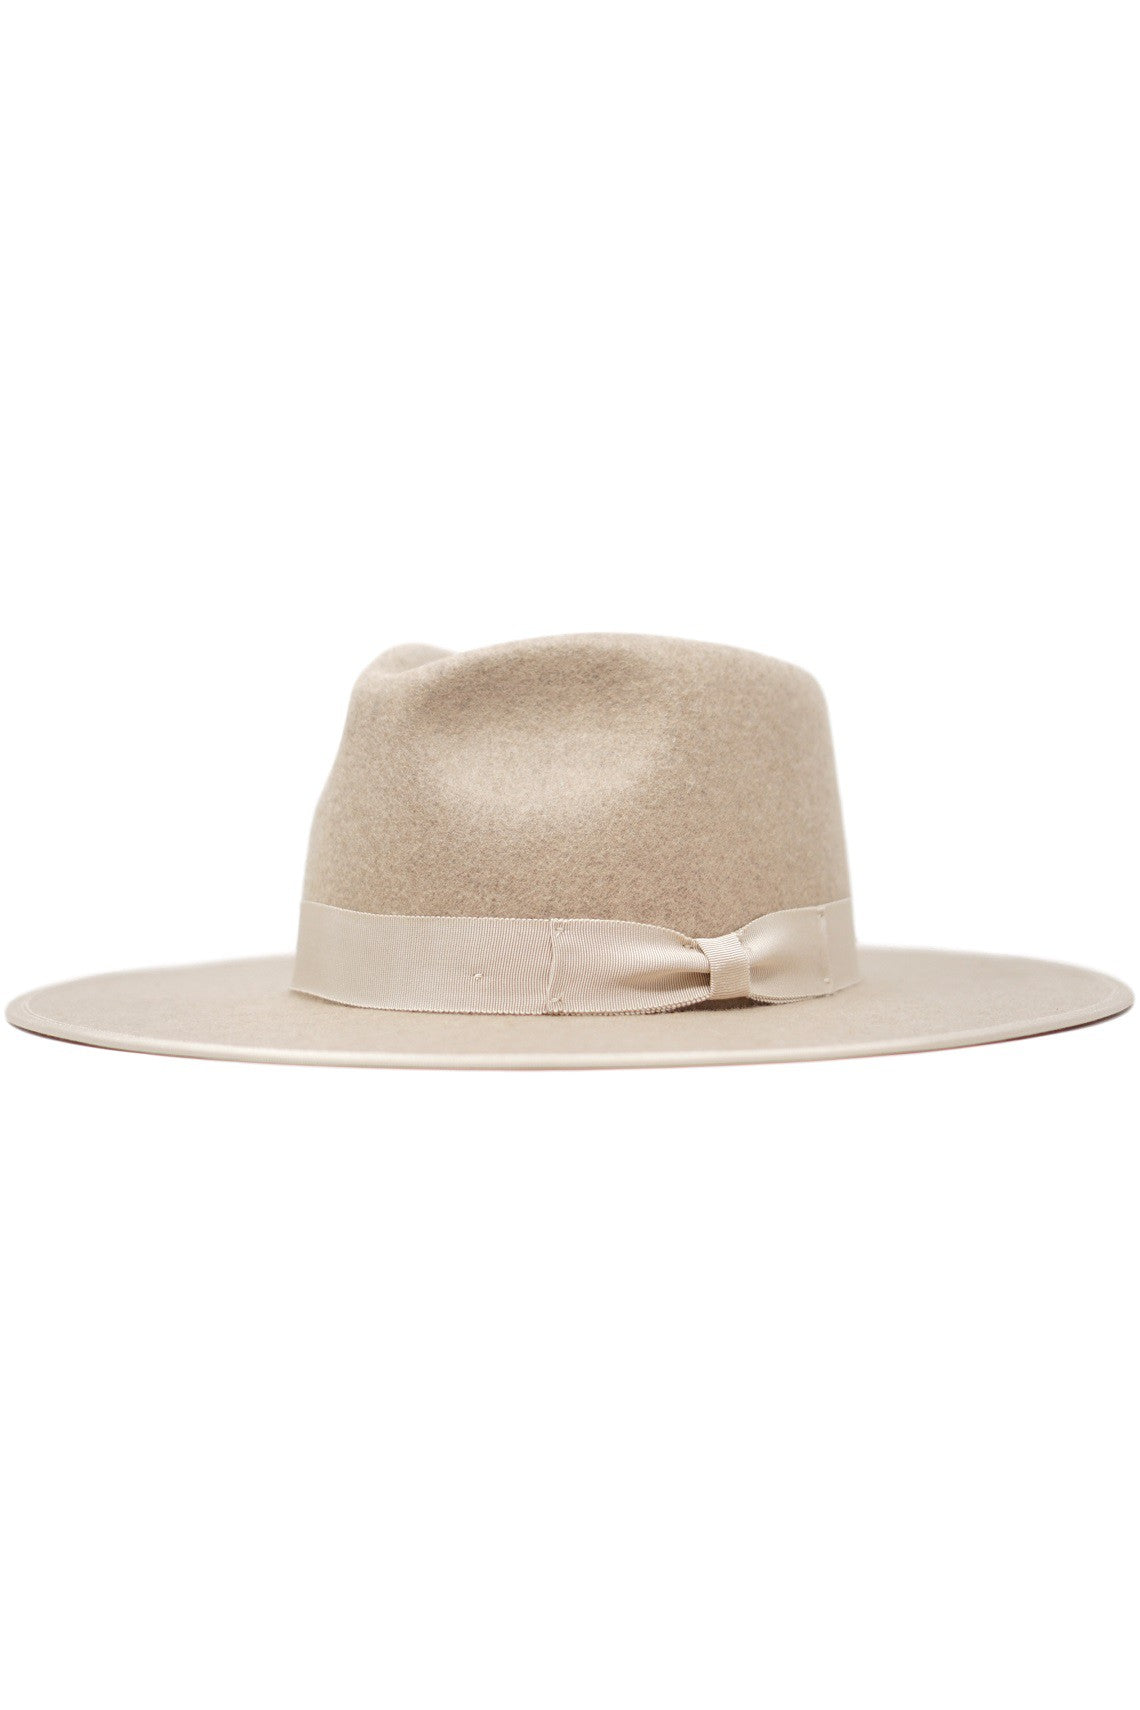 Olive & Pique Wool Felt Rancher Hat